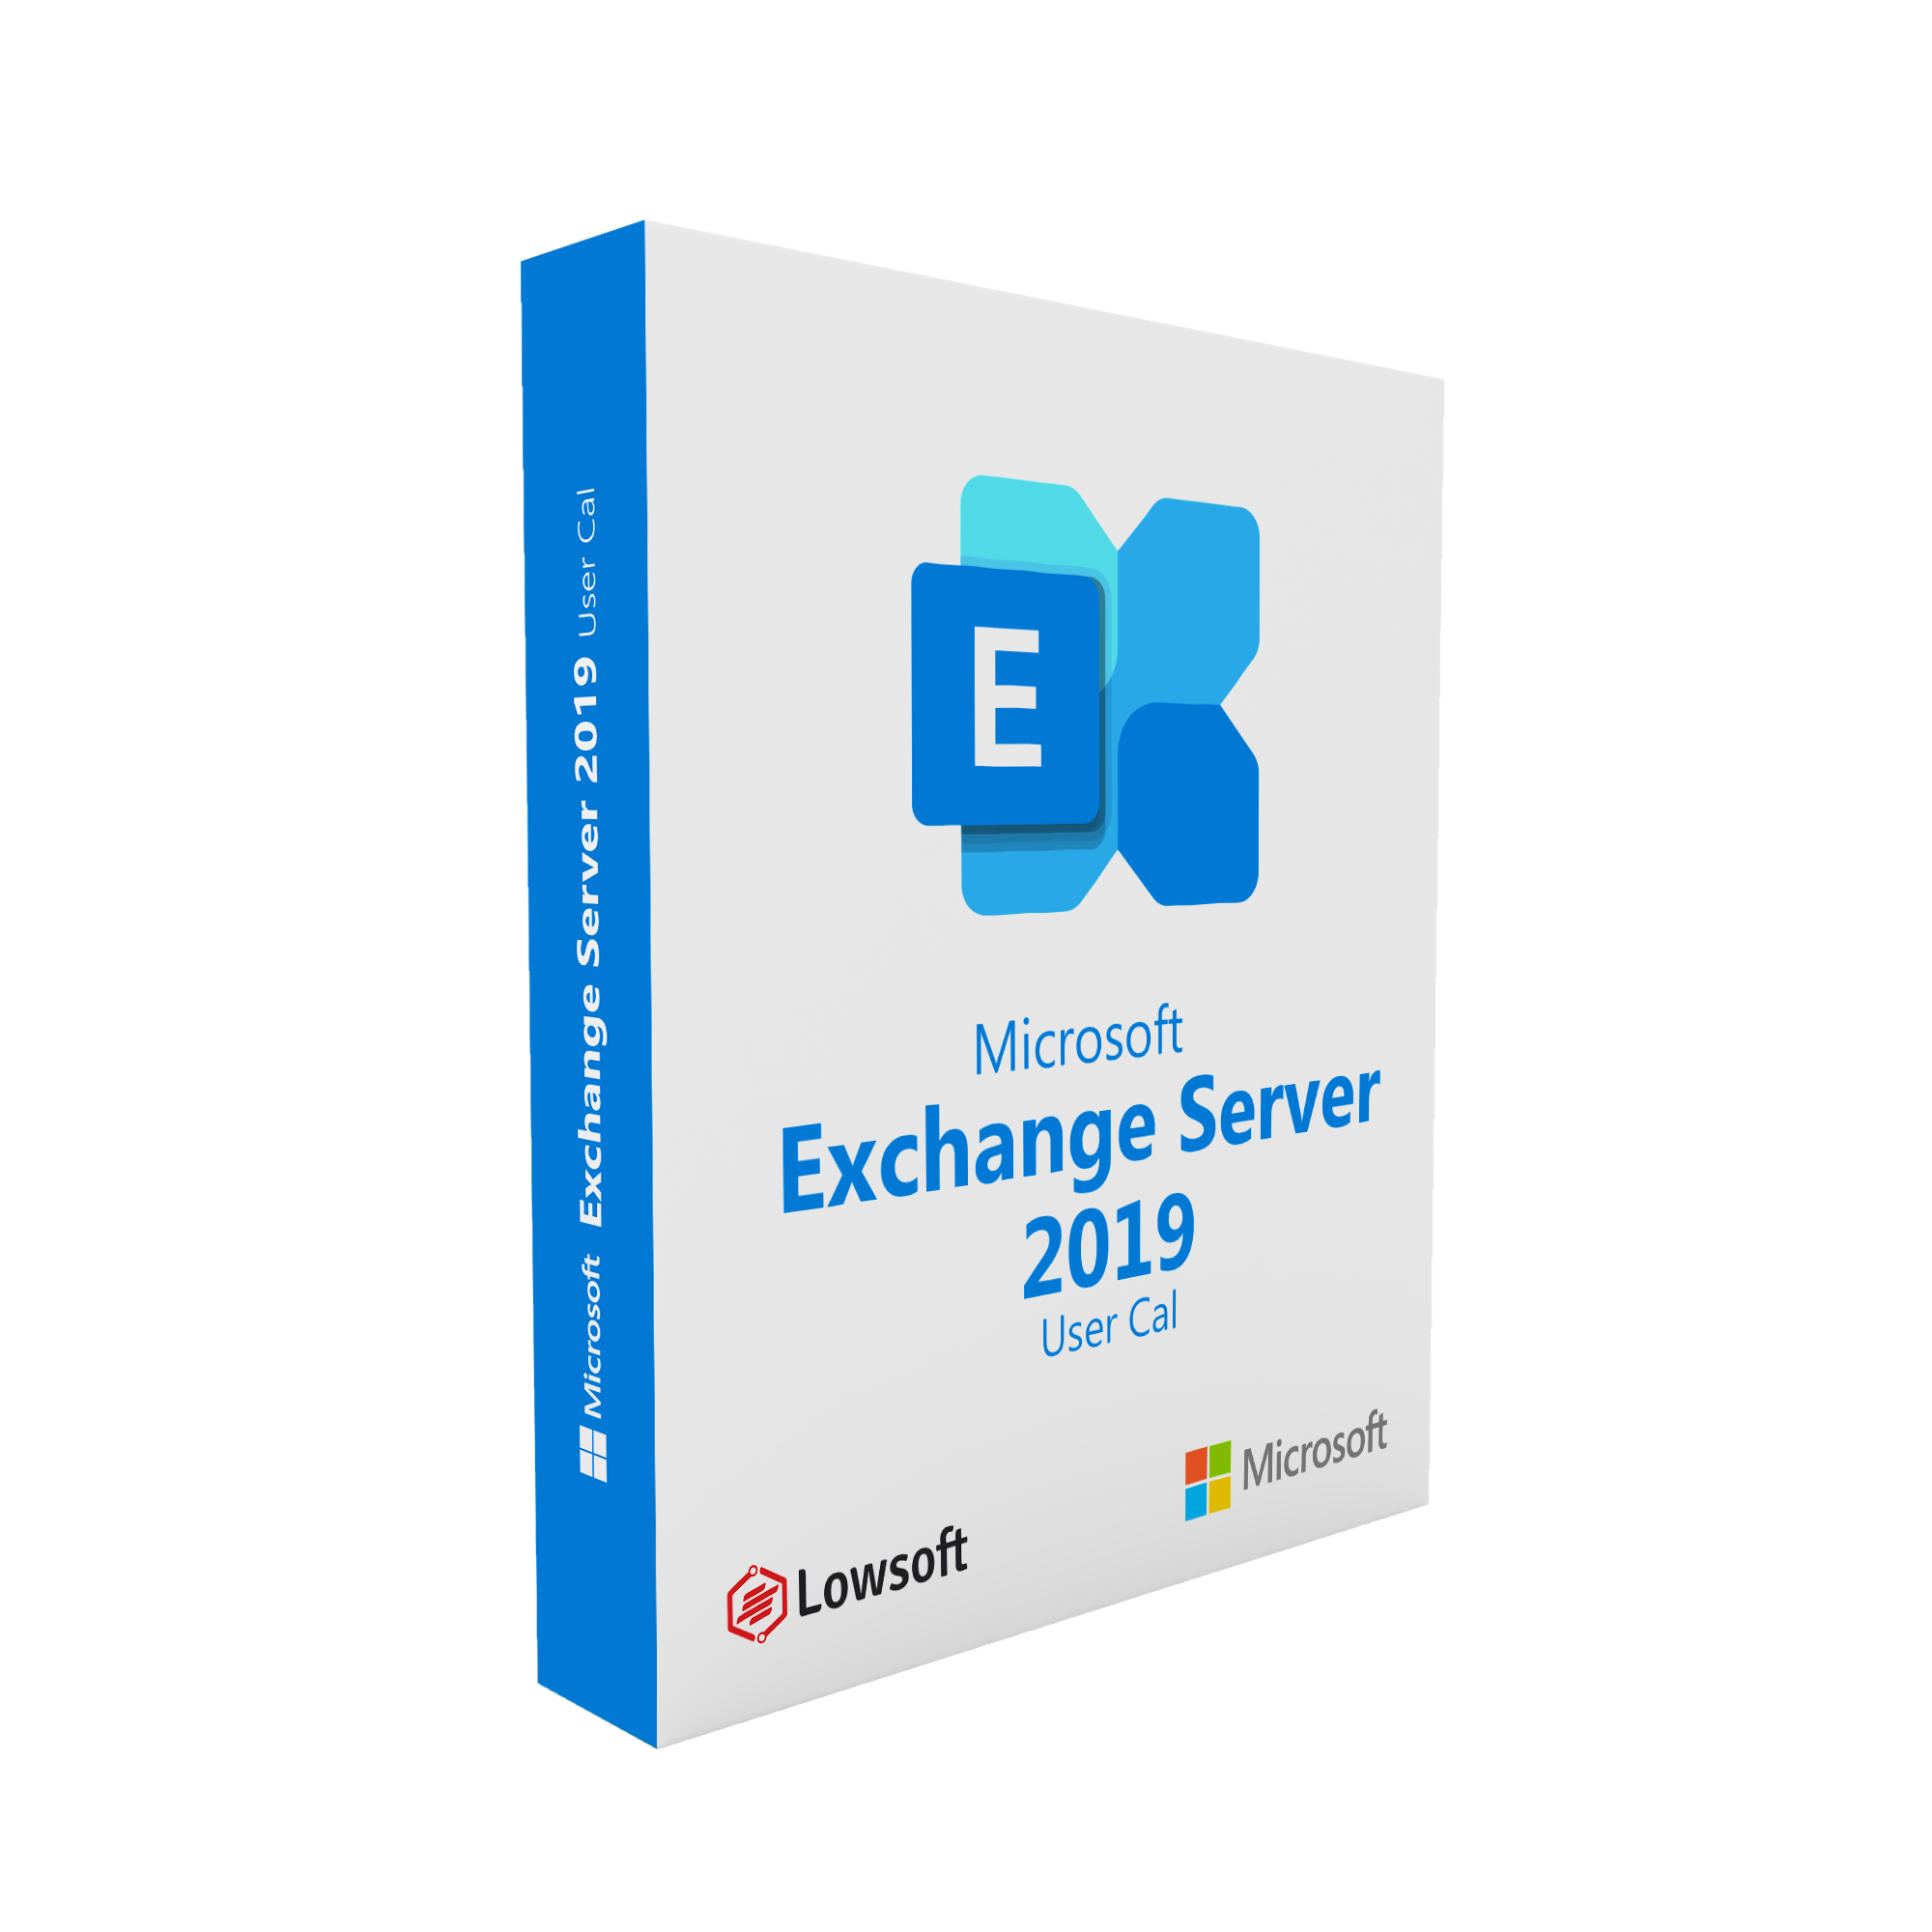 Exchange Server 2019 User CAL